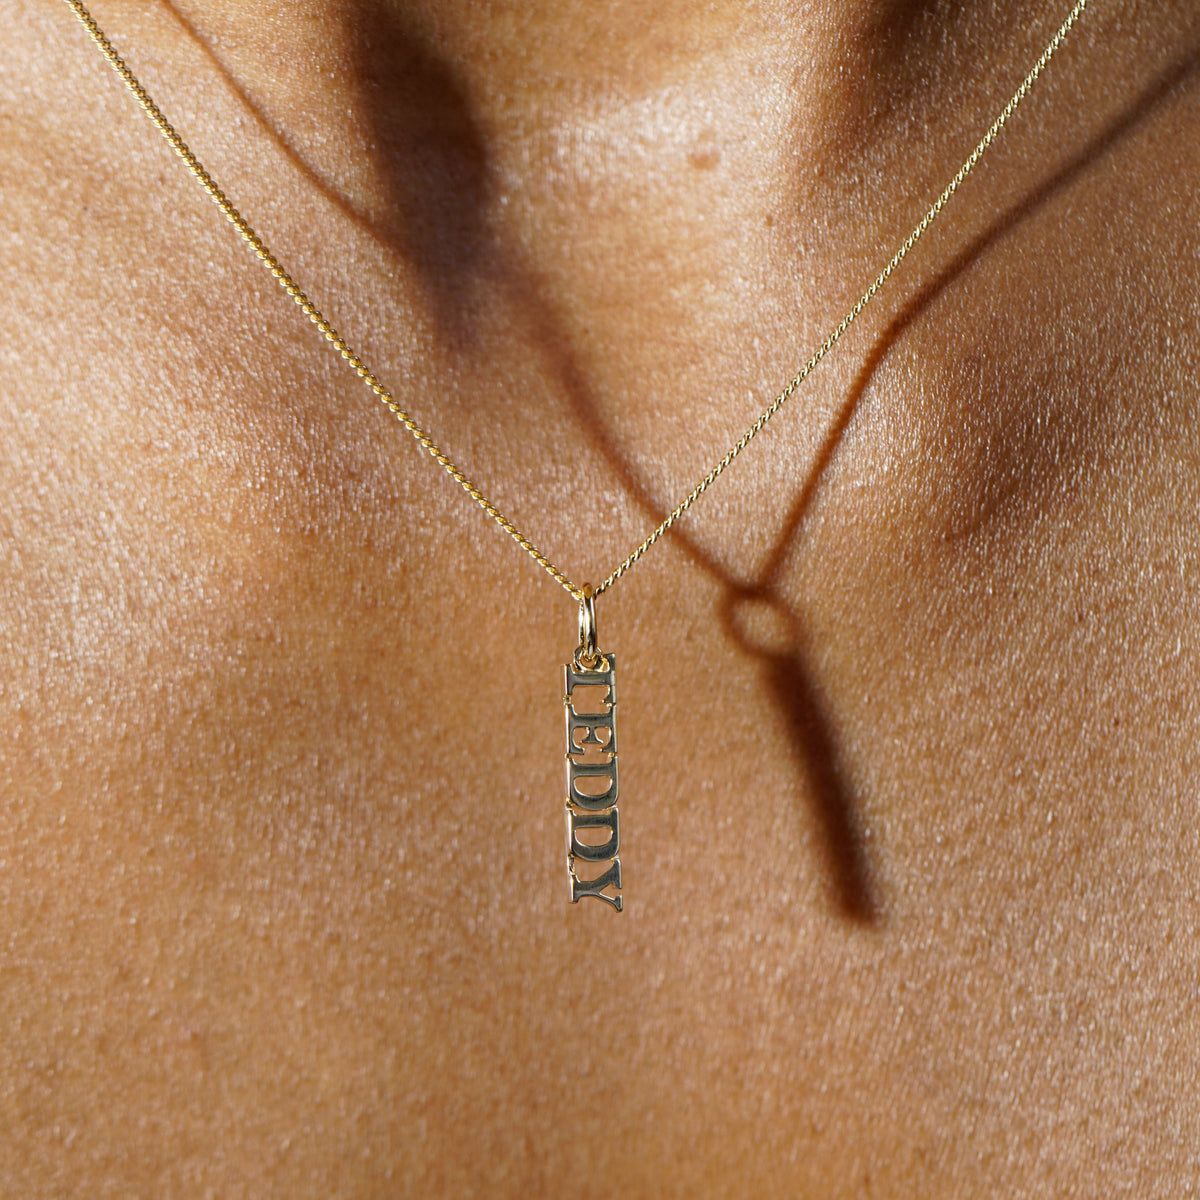 Littlesmiths Personalise Necklaces @ Selfridges Store –  thestyleartisandotcom